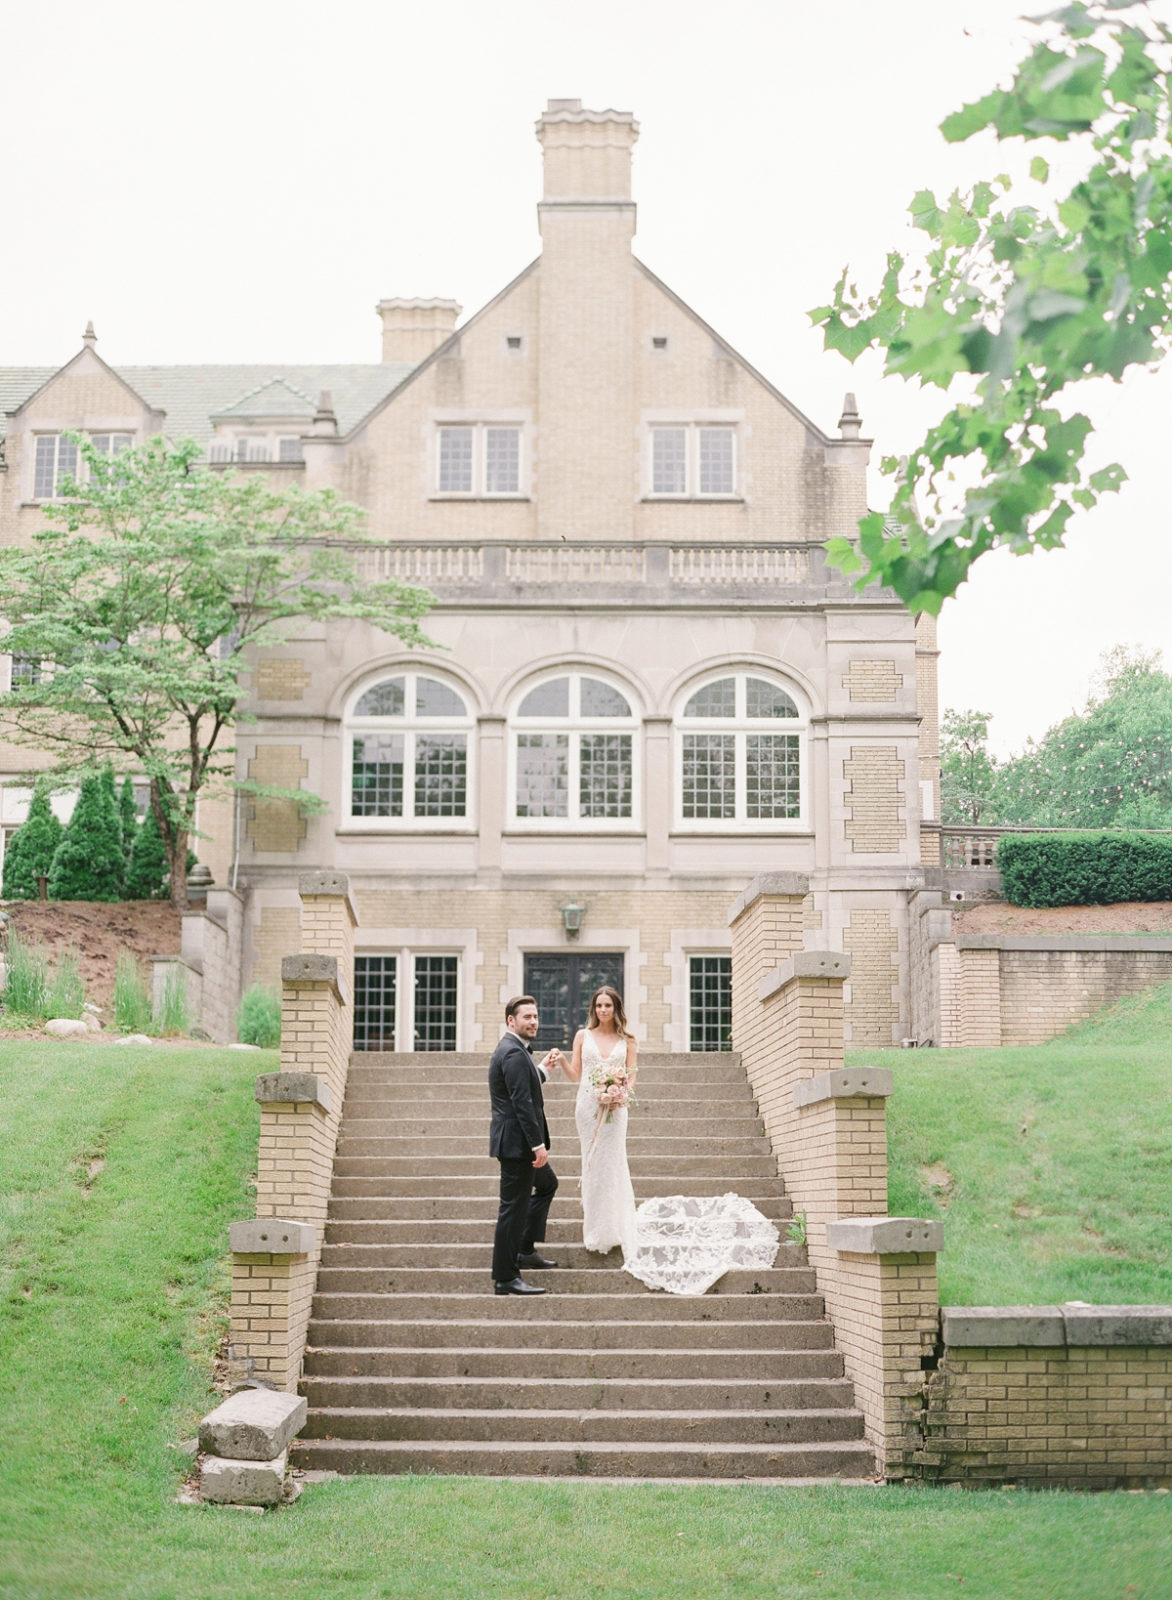 Laurel Hall Wedding Photos | Molly Carr Photography | Fine Art Film Photographer | Chicago Wedding | Summer Garden Party Wedding | European Wedding Inspiration | Bride and Groom First Look